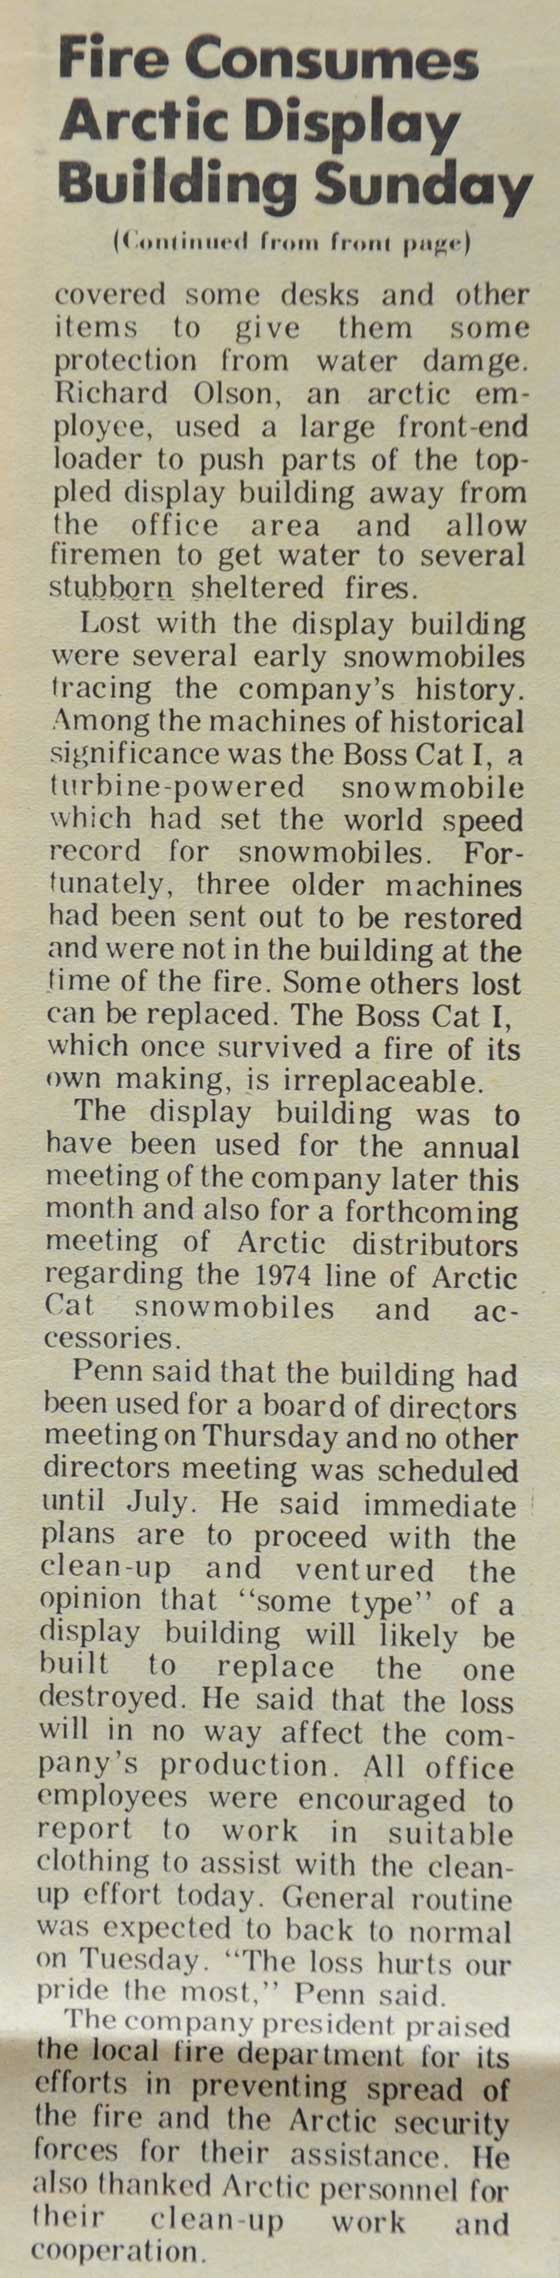 Arctic Cat Display Building Fire in 1973